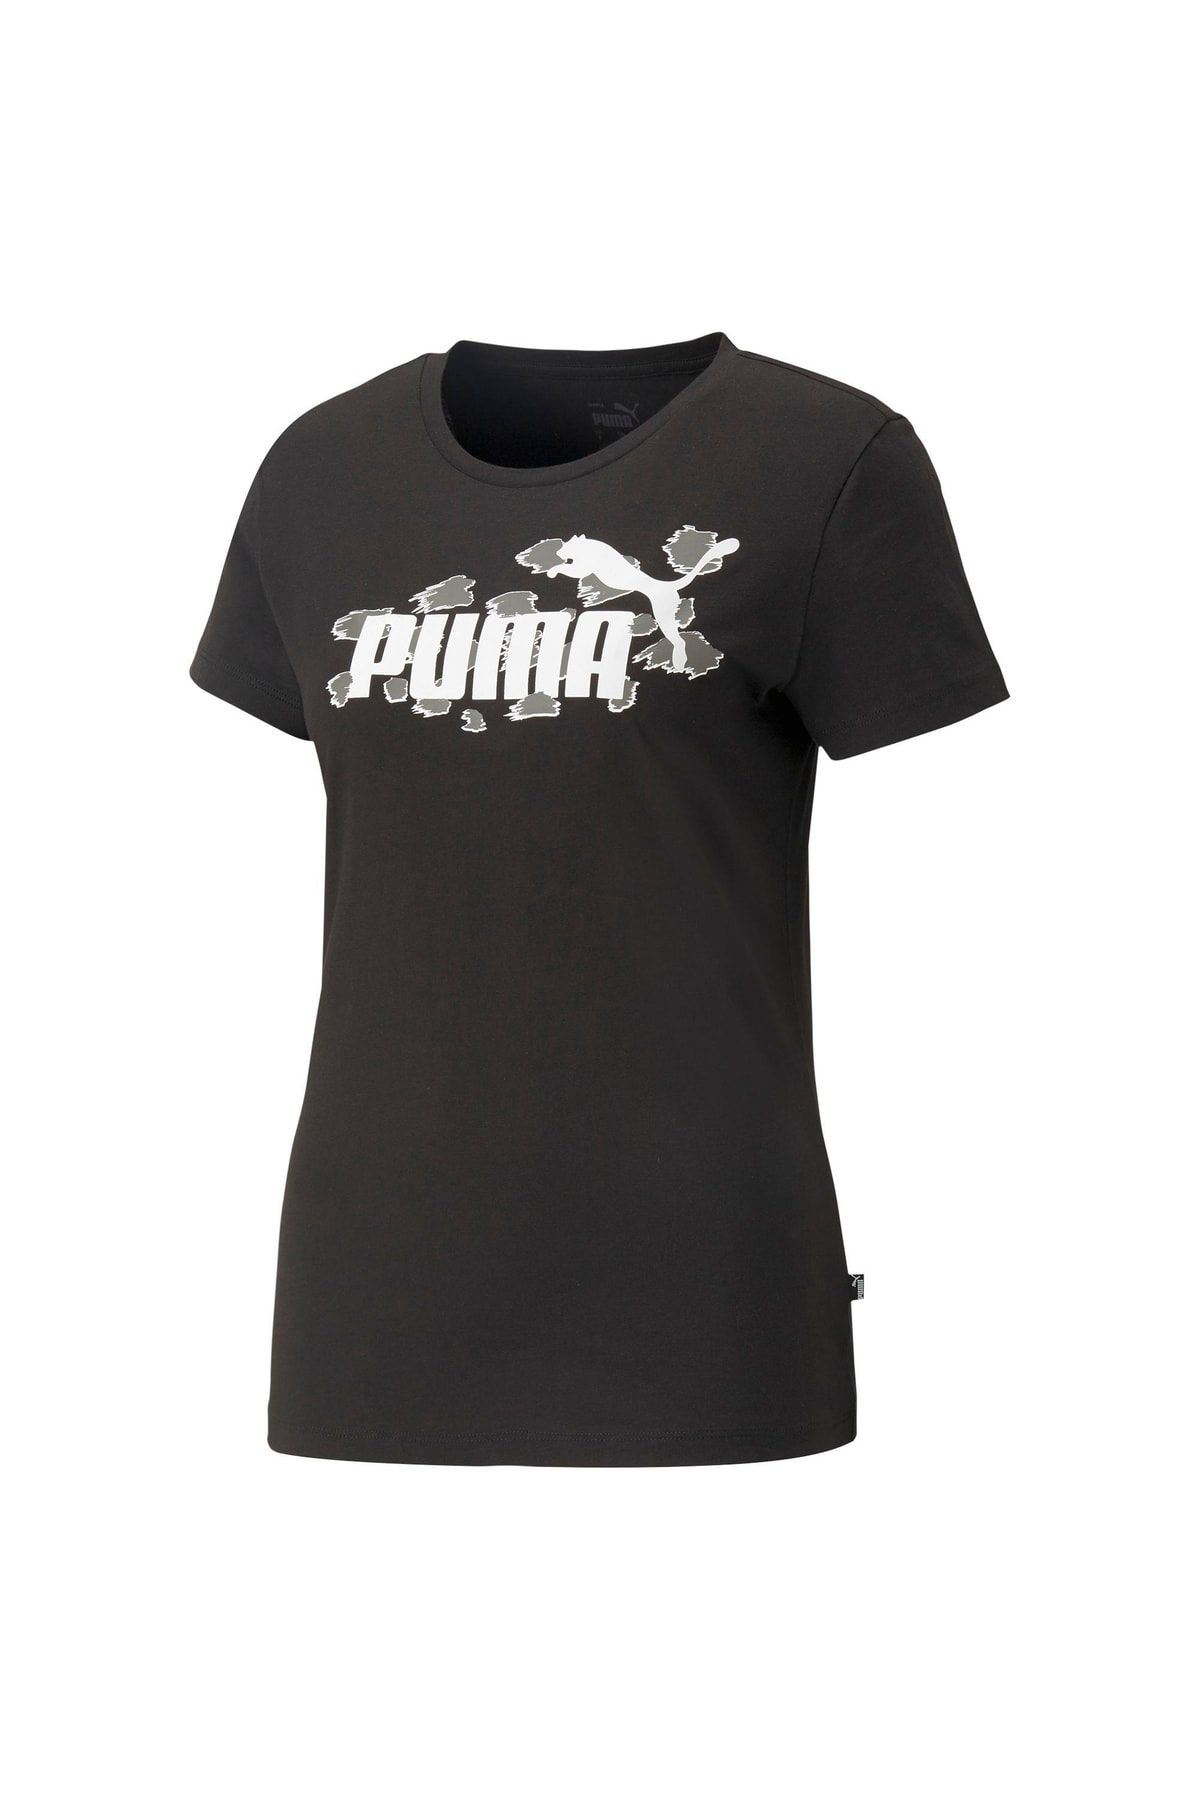 - Ess+ Black - Tee T-Shirt Women\'s Puma Animal Trendyol